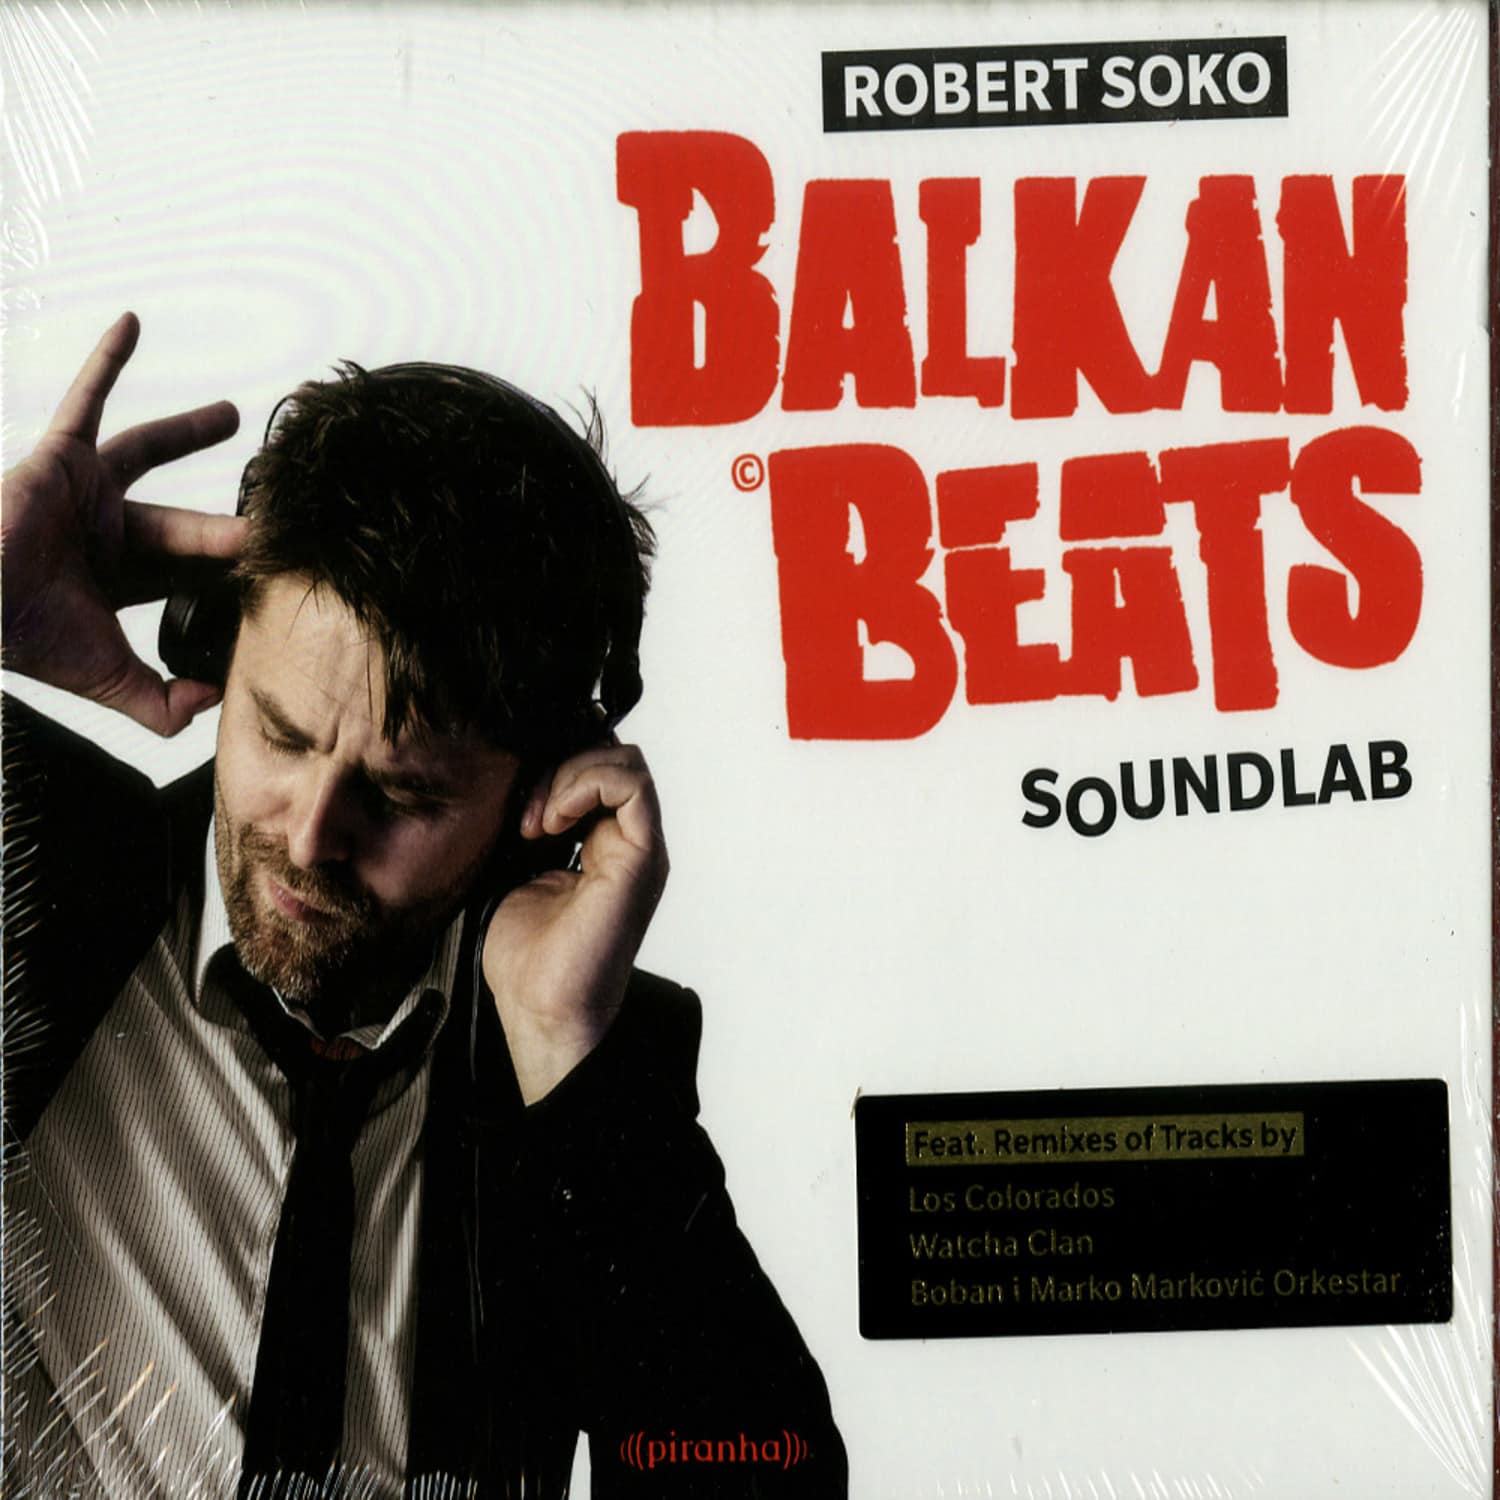 Robert Soko - BALKANBEATS SOUNDLAB 